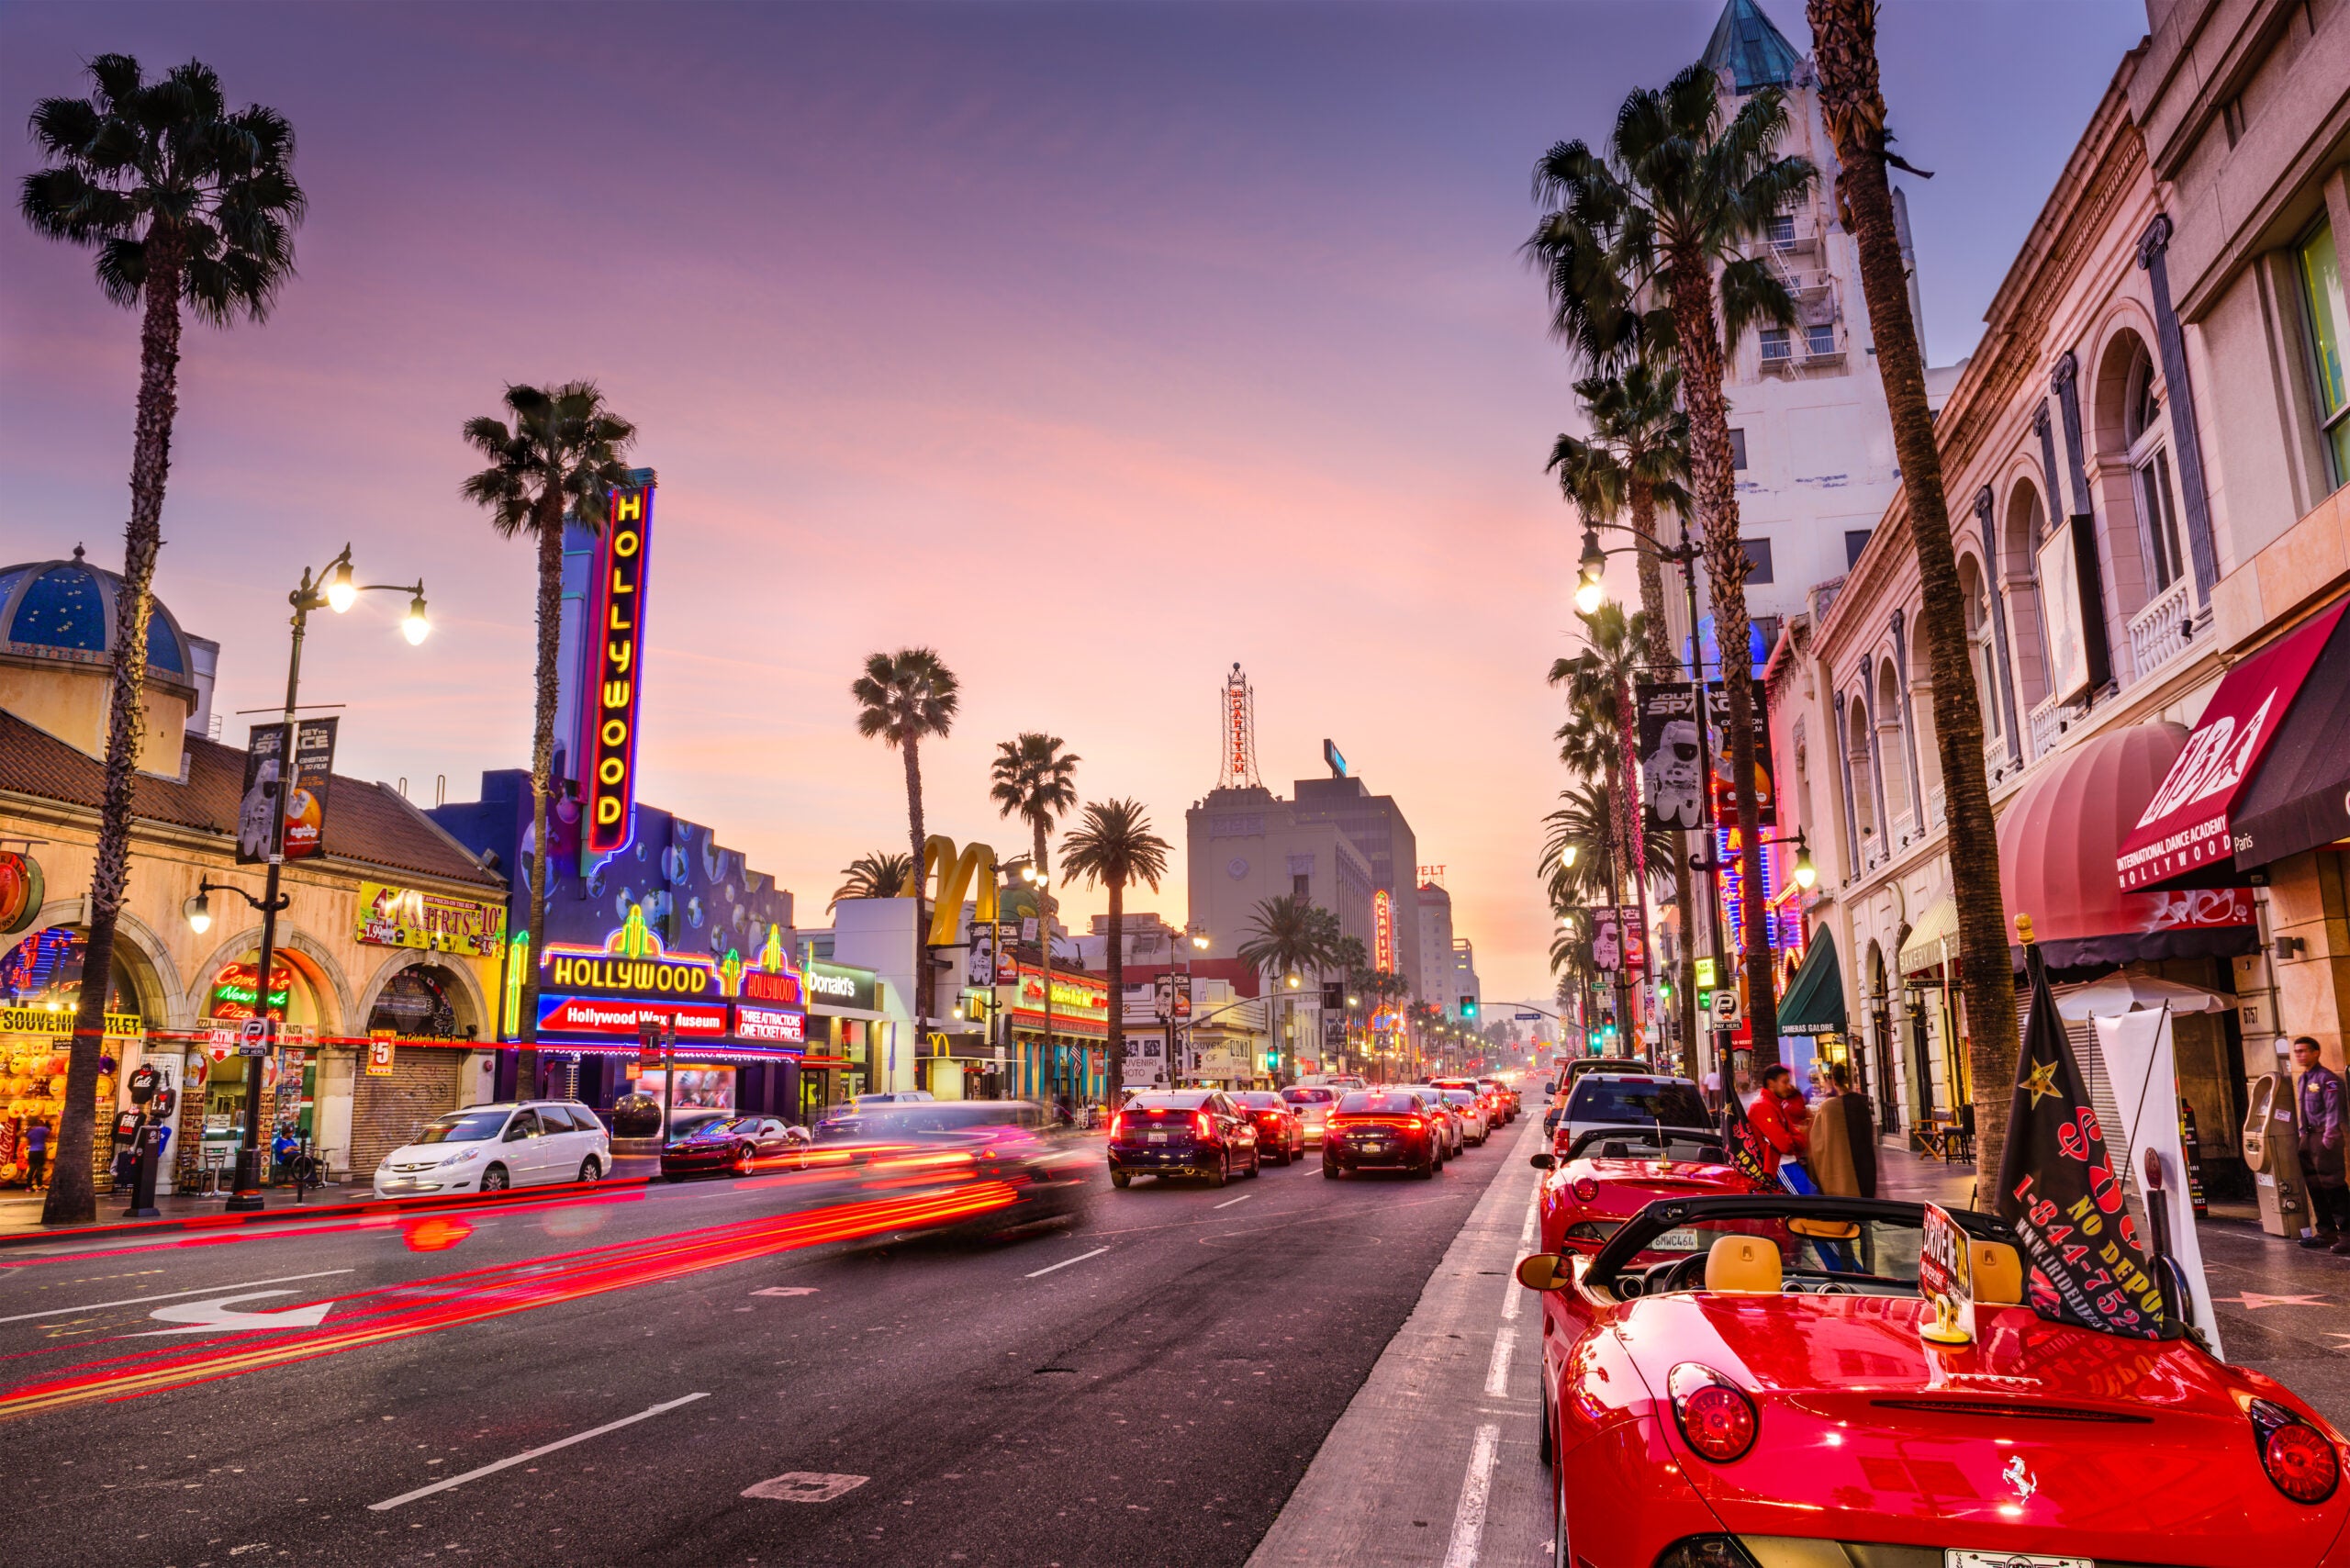 Hollywood, Los Angeles street scene at night